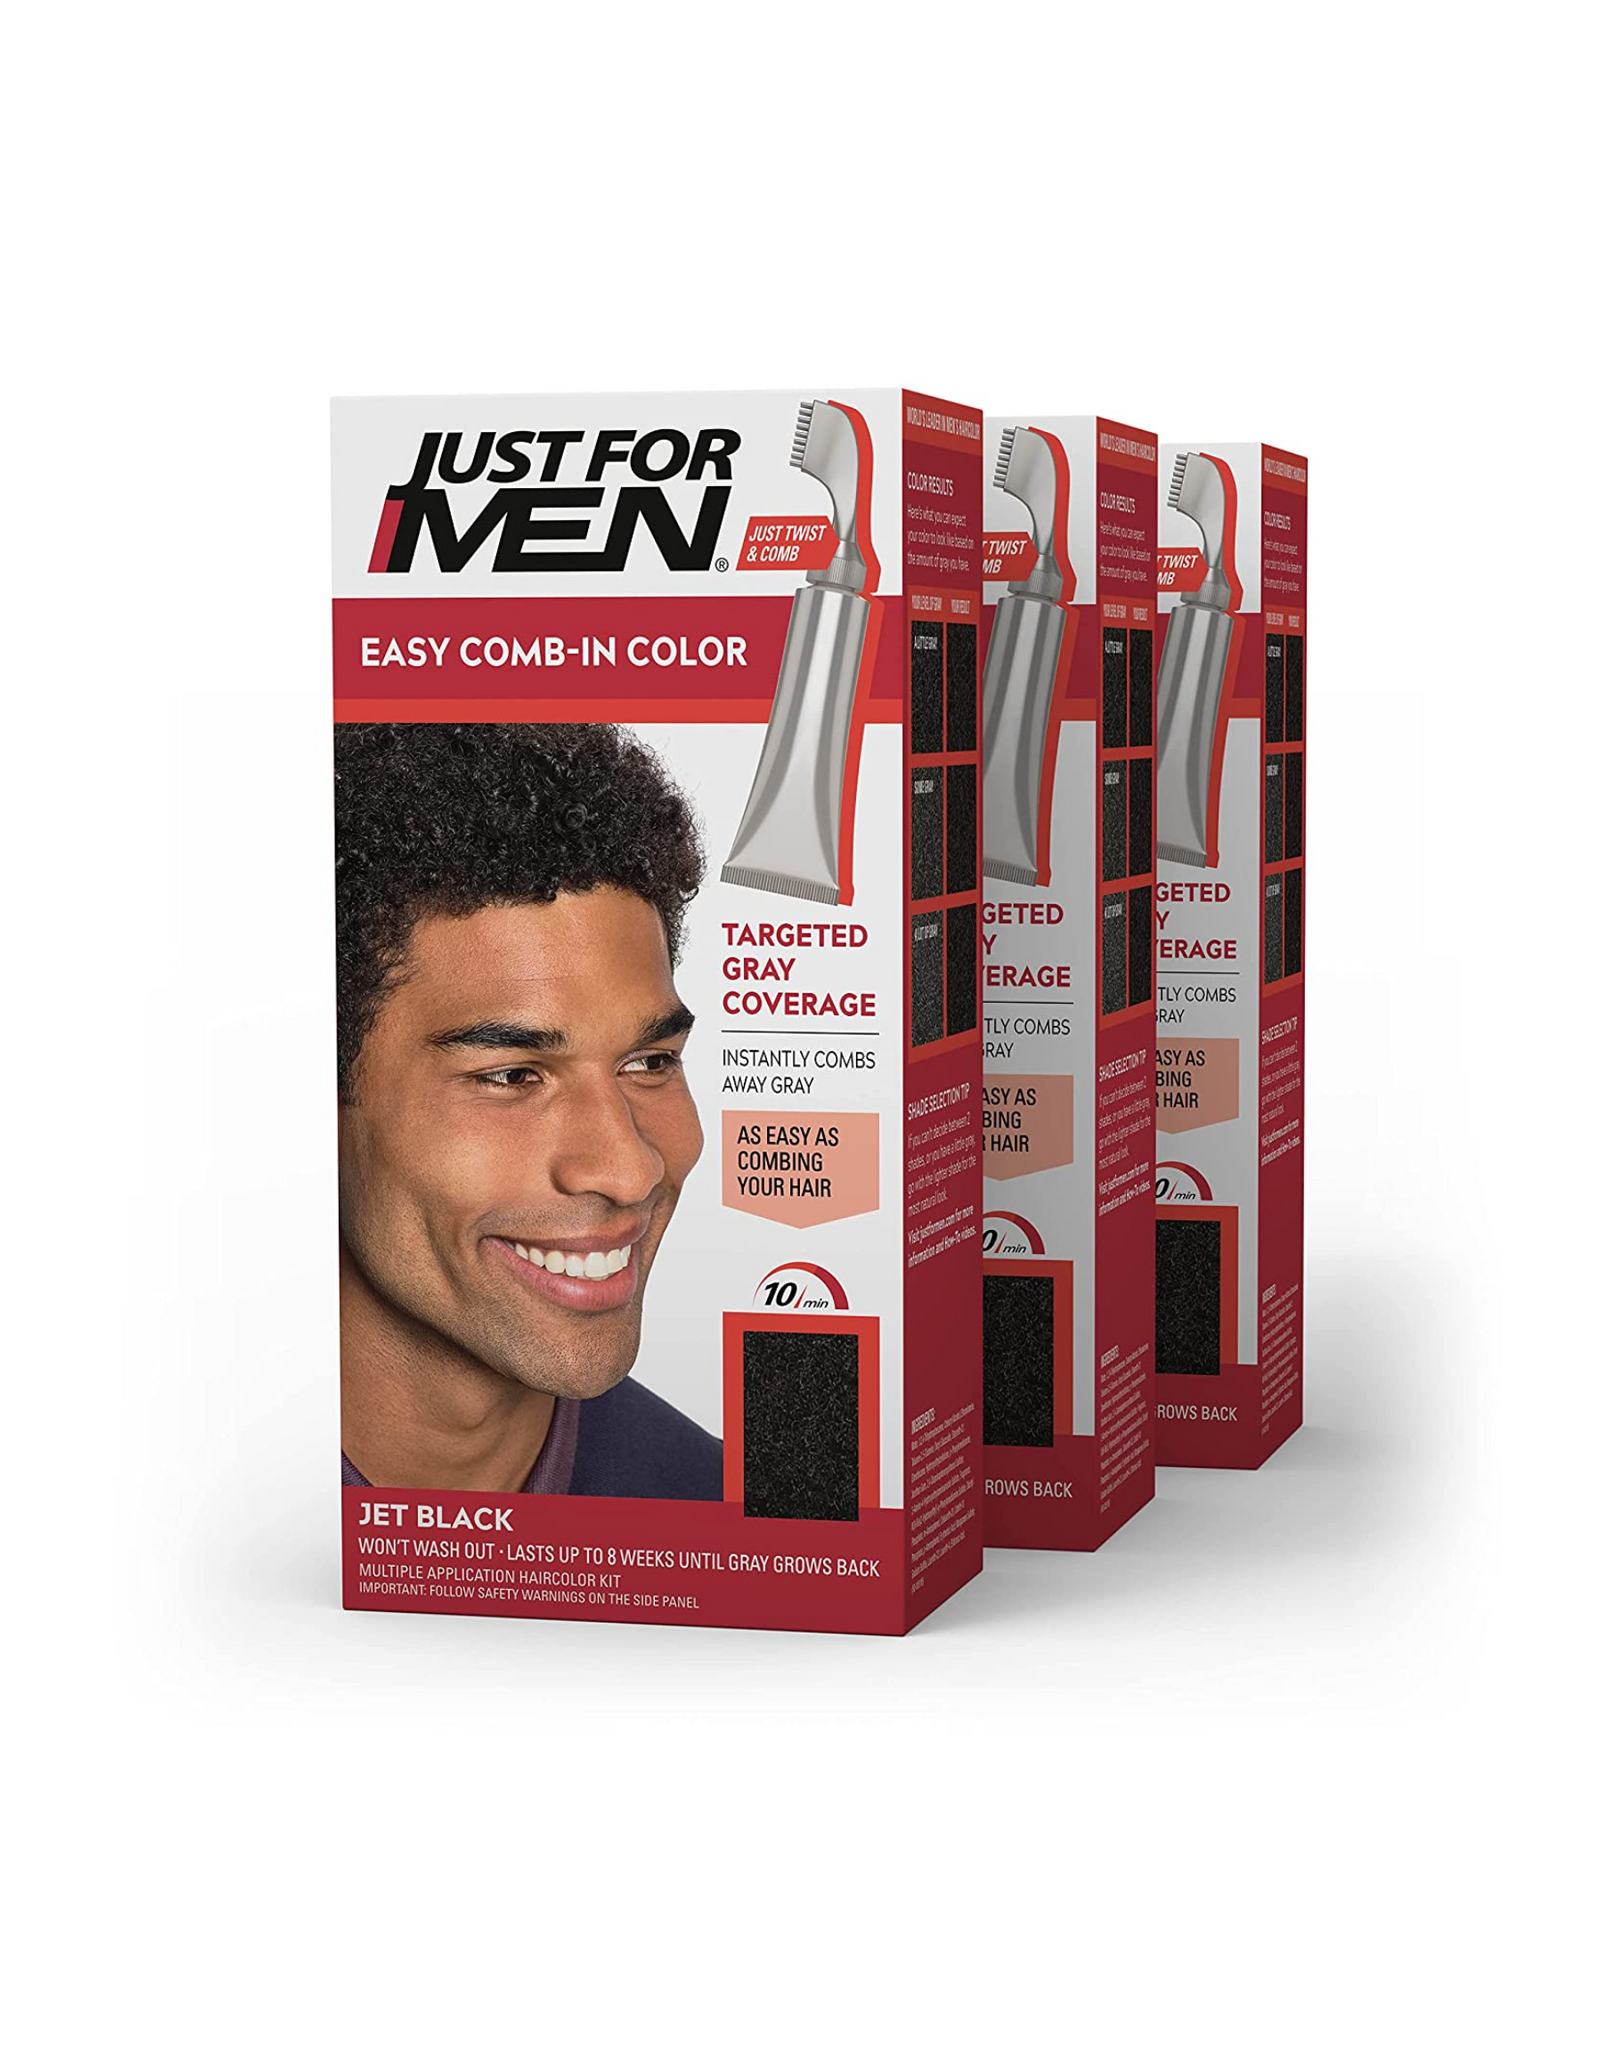 Just For Men Easy Comb-In Color Mens Hair Dye, Jet Black, 3 Pack